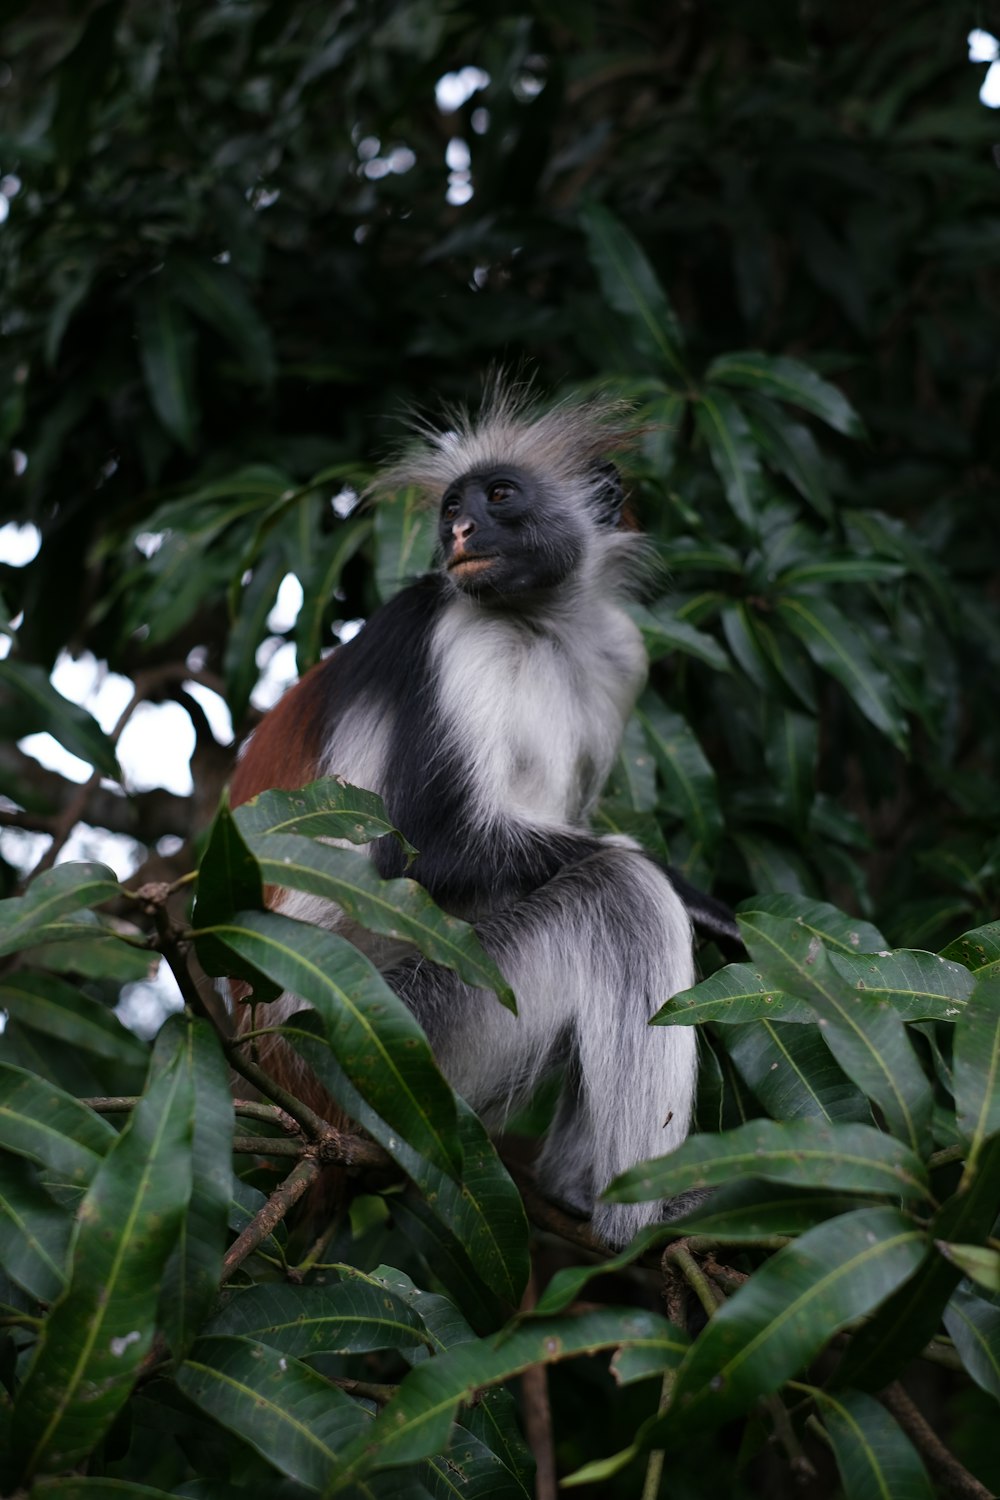 a monkey sitting on a branch